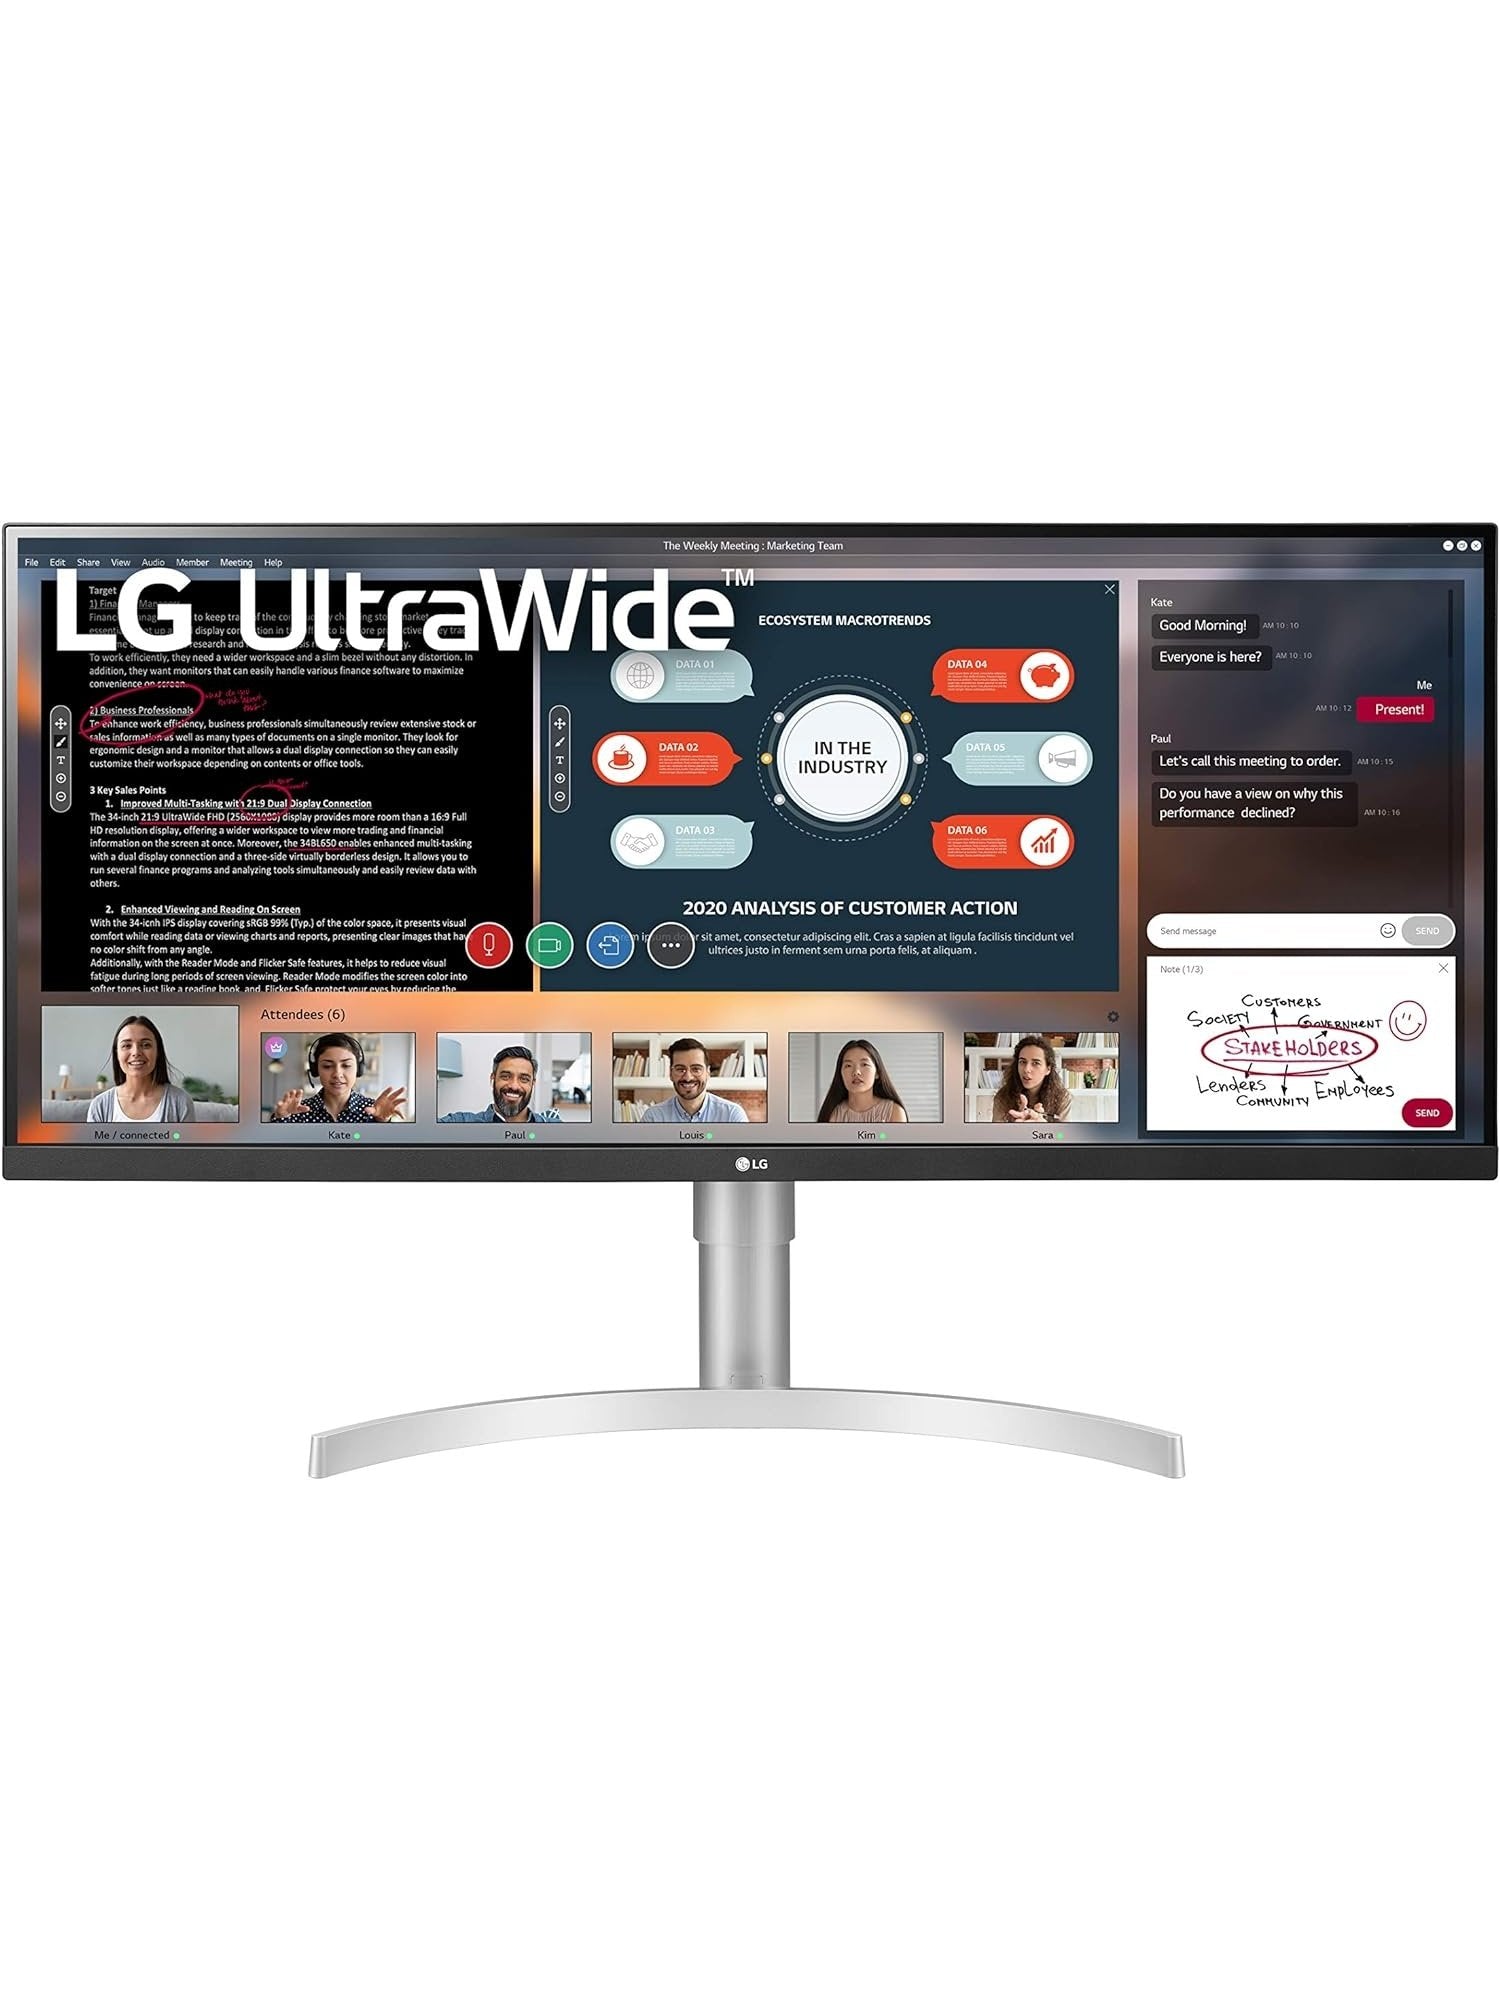 LG 34WN650-W UltraWide Monitor 34" 21:9 FHD 2560 x 1080 IPS Display, VESA DisplayHDR 400, AMD FreeSync, 3-Side Virtually Borderless Design - Silver